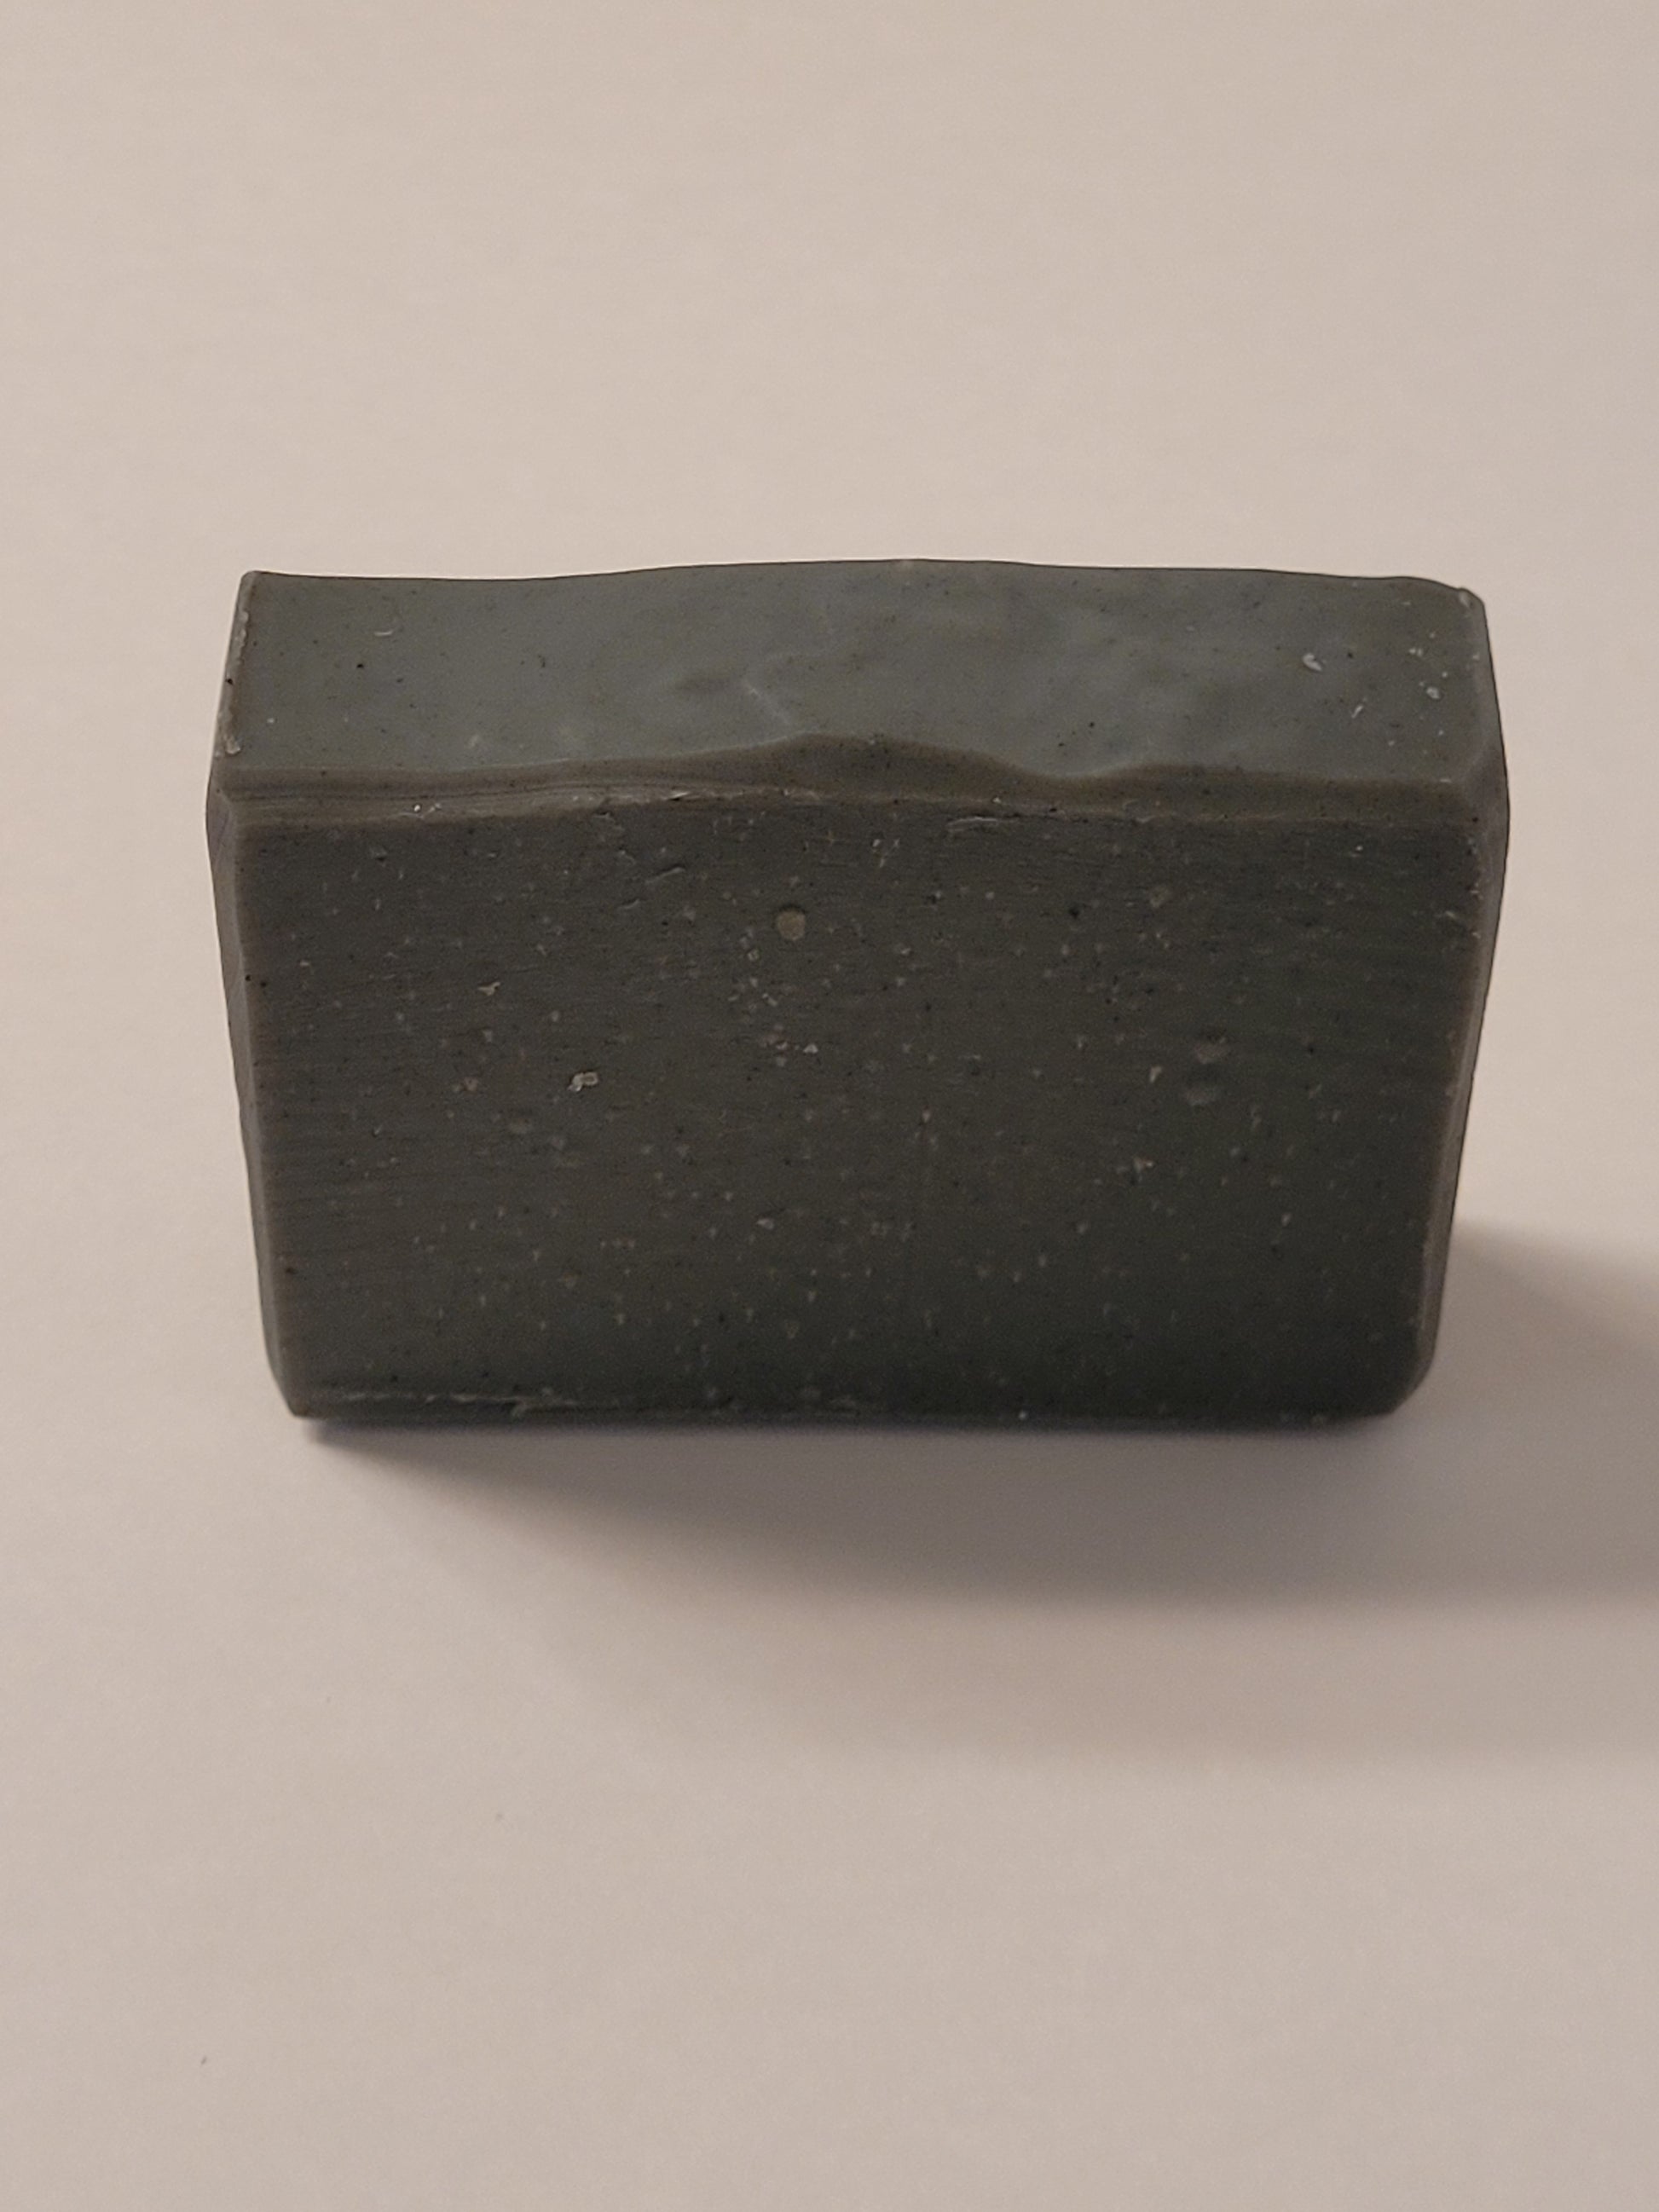 a plain black bar of soap on a grey background. 